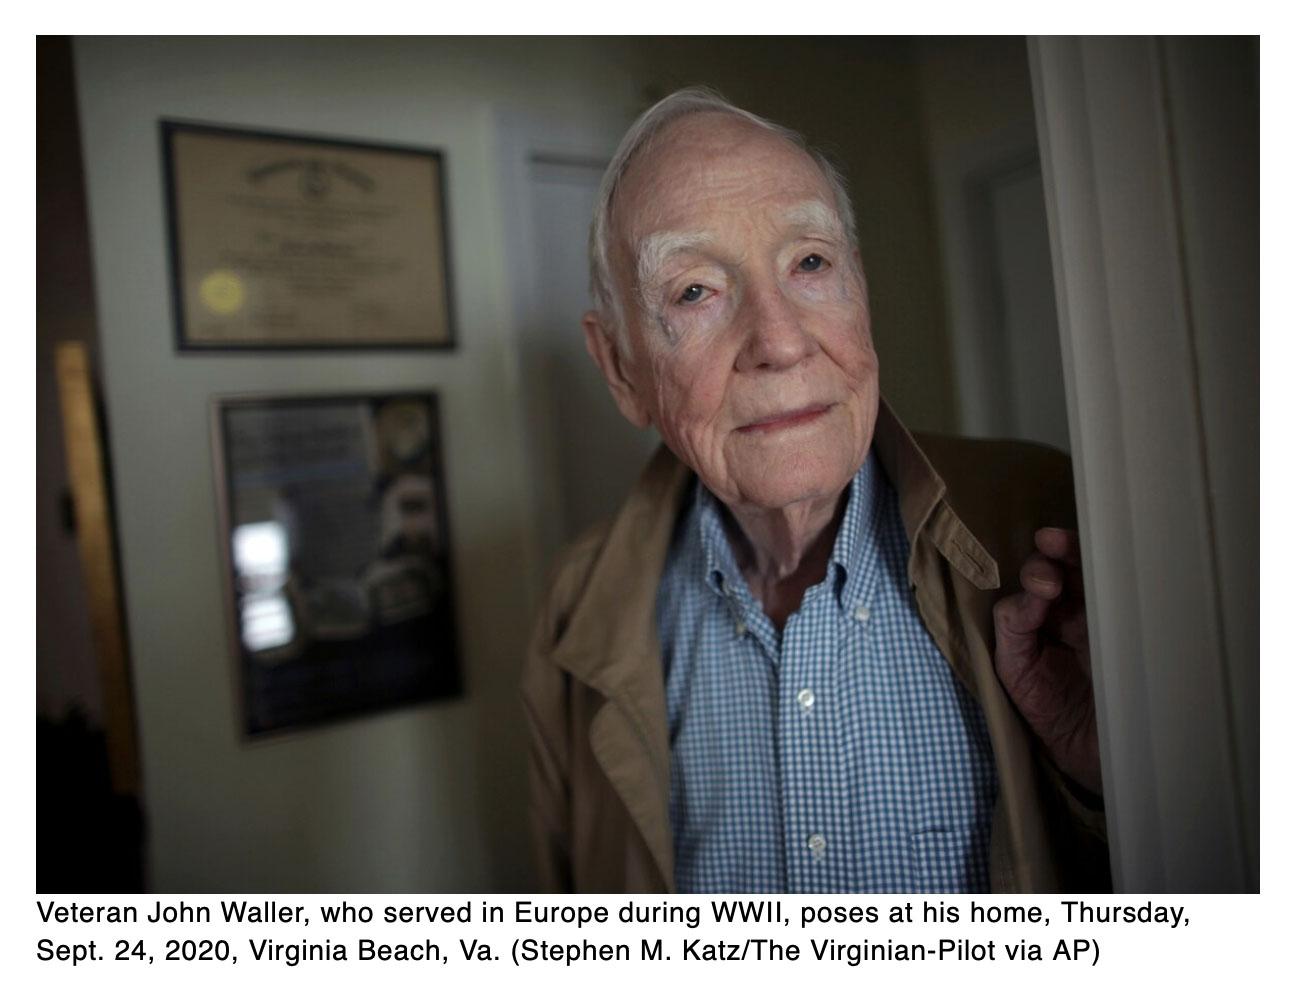  Documentary follows 96-year-old World War II veterans return of portrait stolen in France